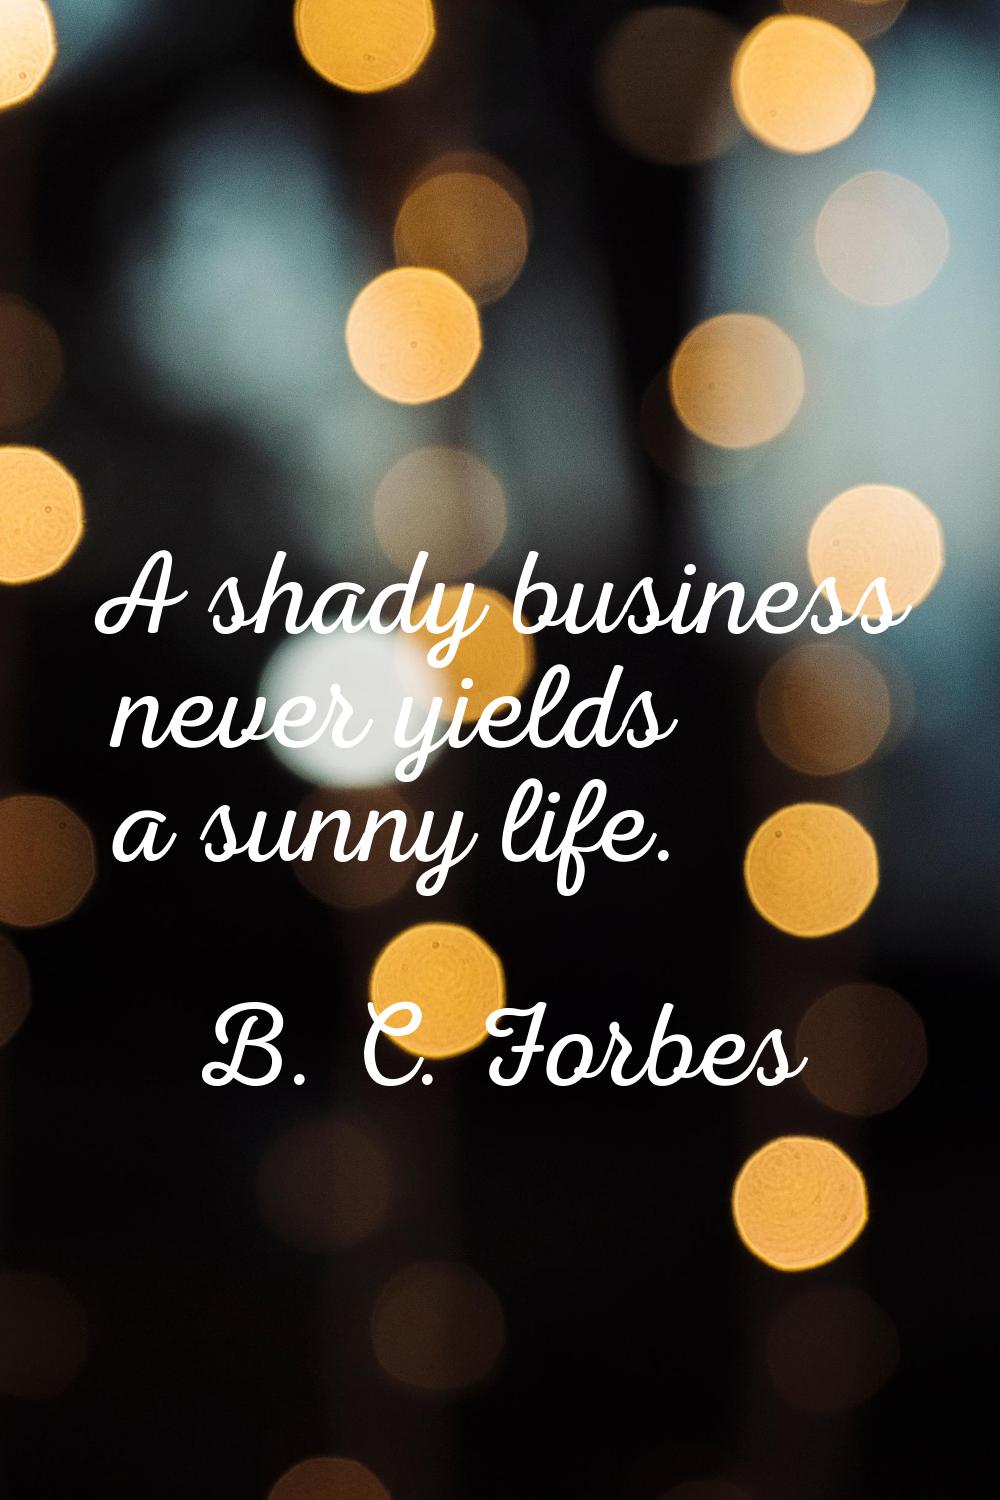 A shady business never yields a sunny life.